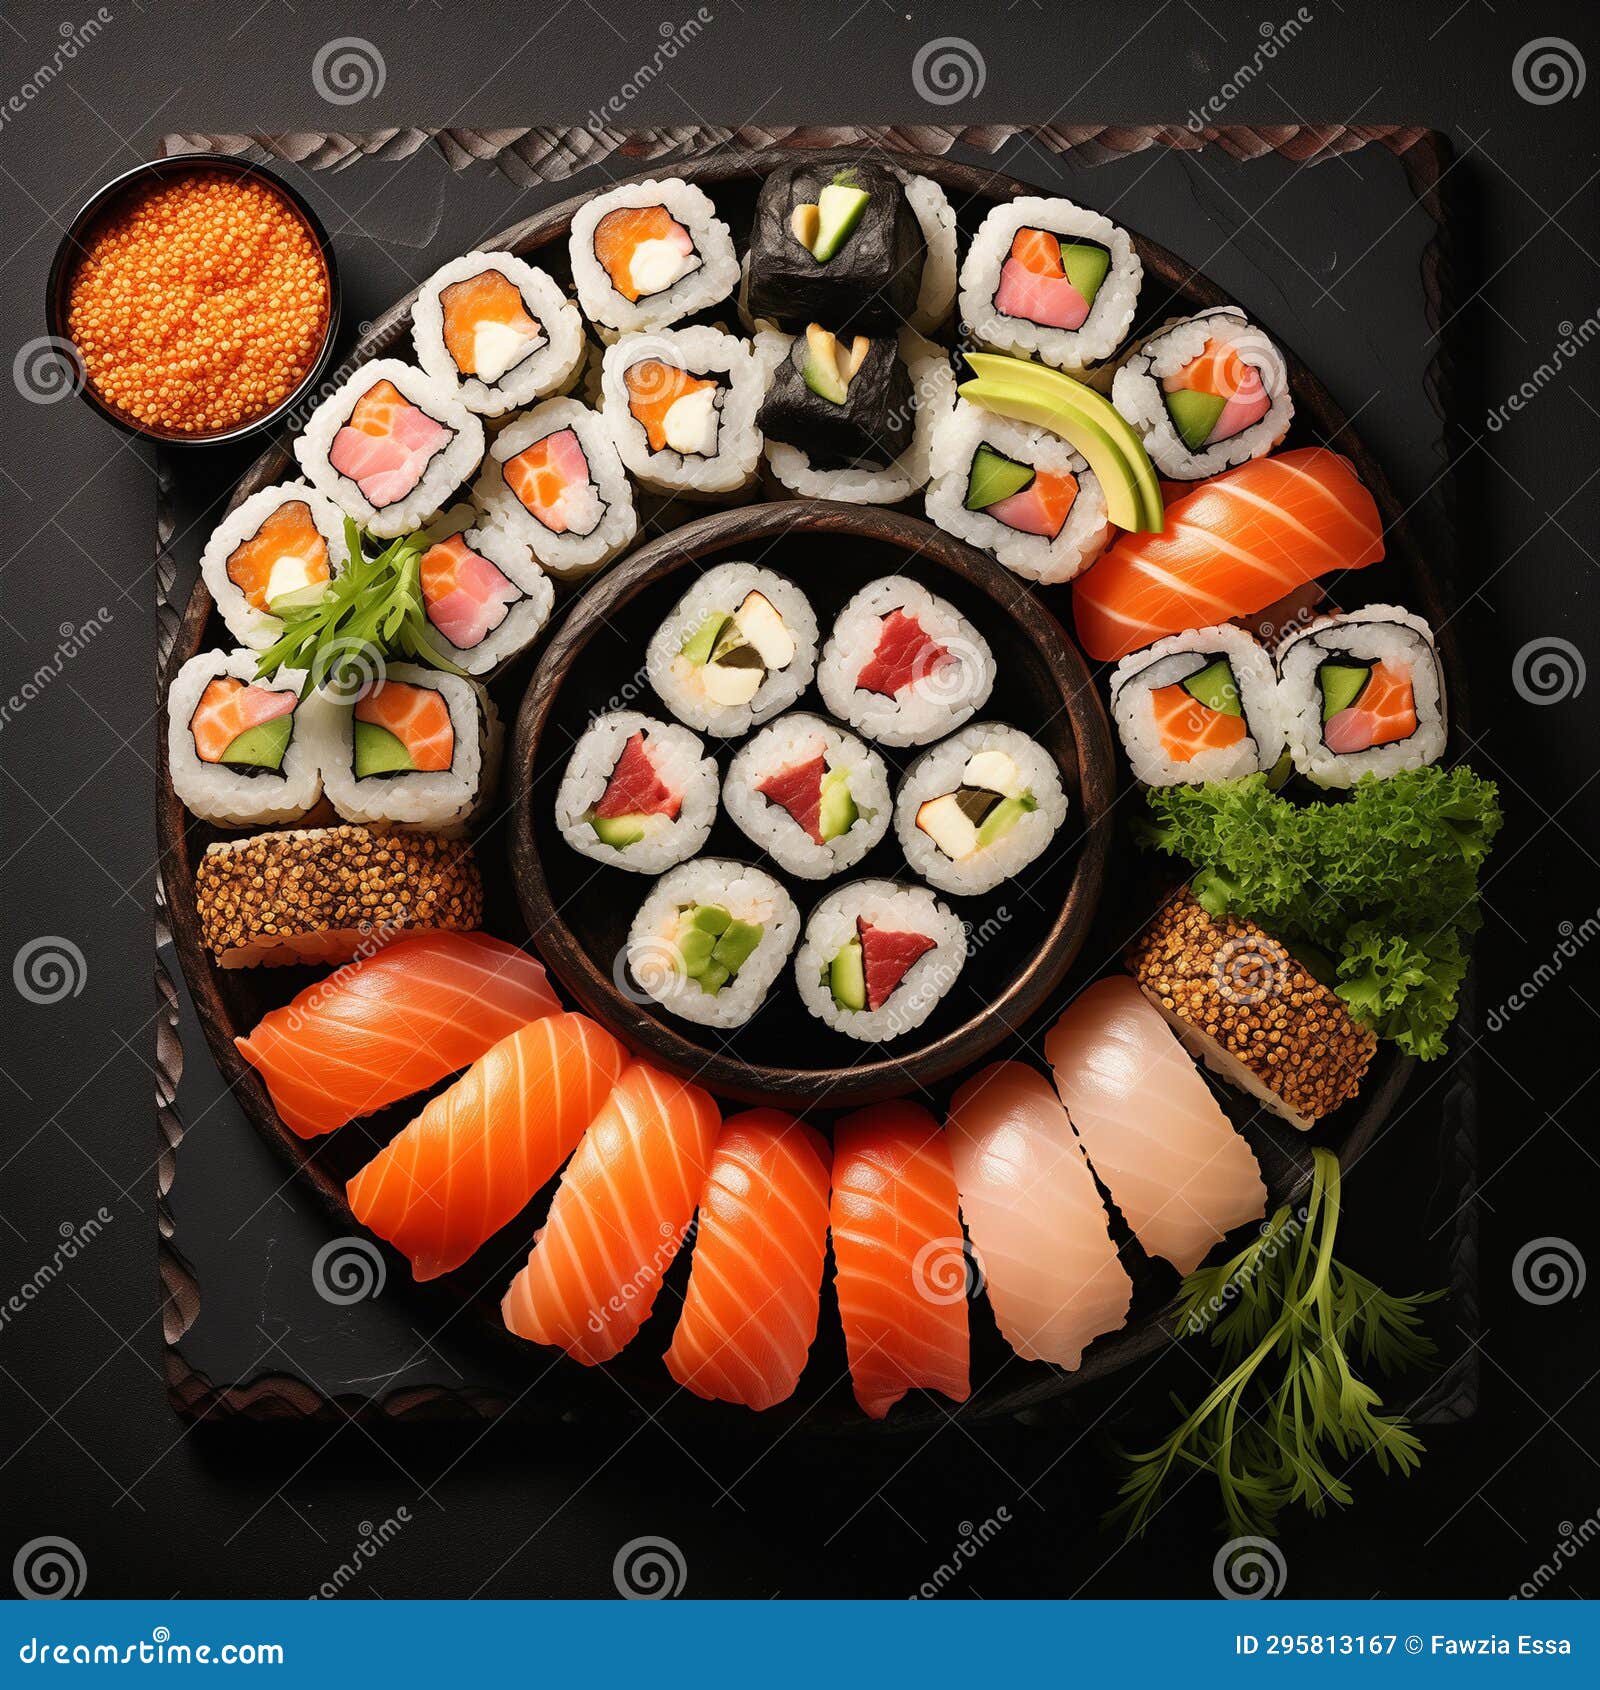 https://thumbs.dreamstime.com/z/sushi-set-nigiri-rolls-sashimi-served-traditional-japan-black-traditional-plate-dark-background-sushi-set-nigiri-rolls-295813167.jpg